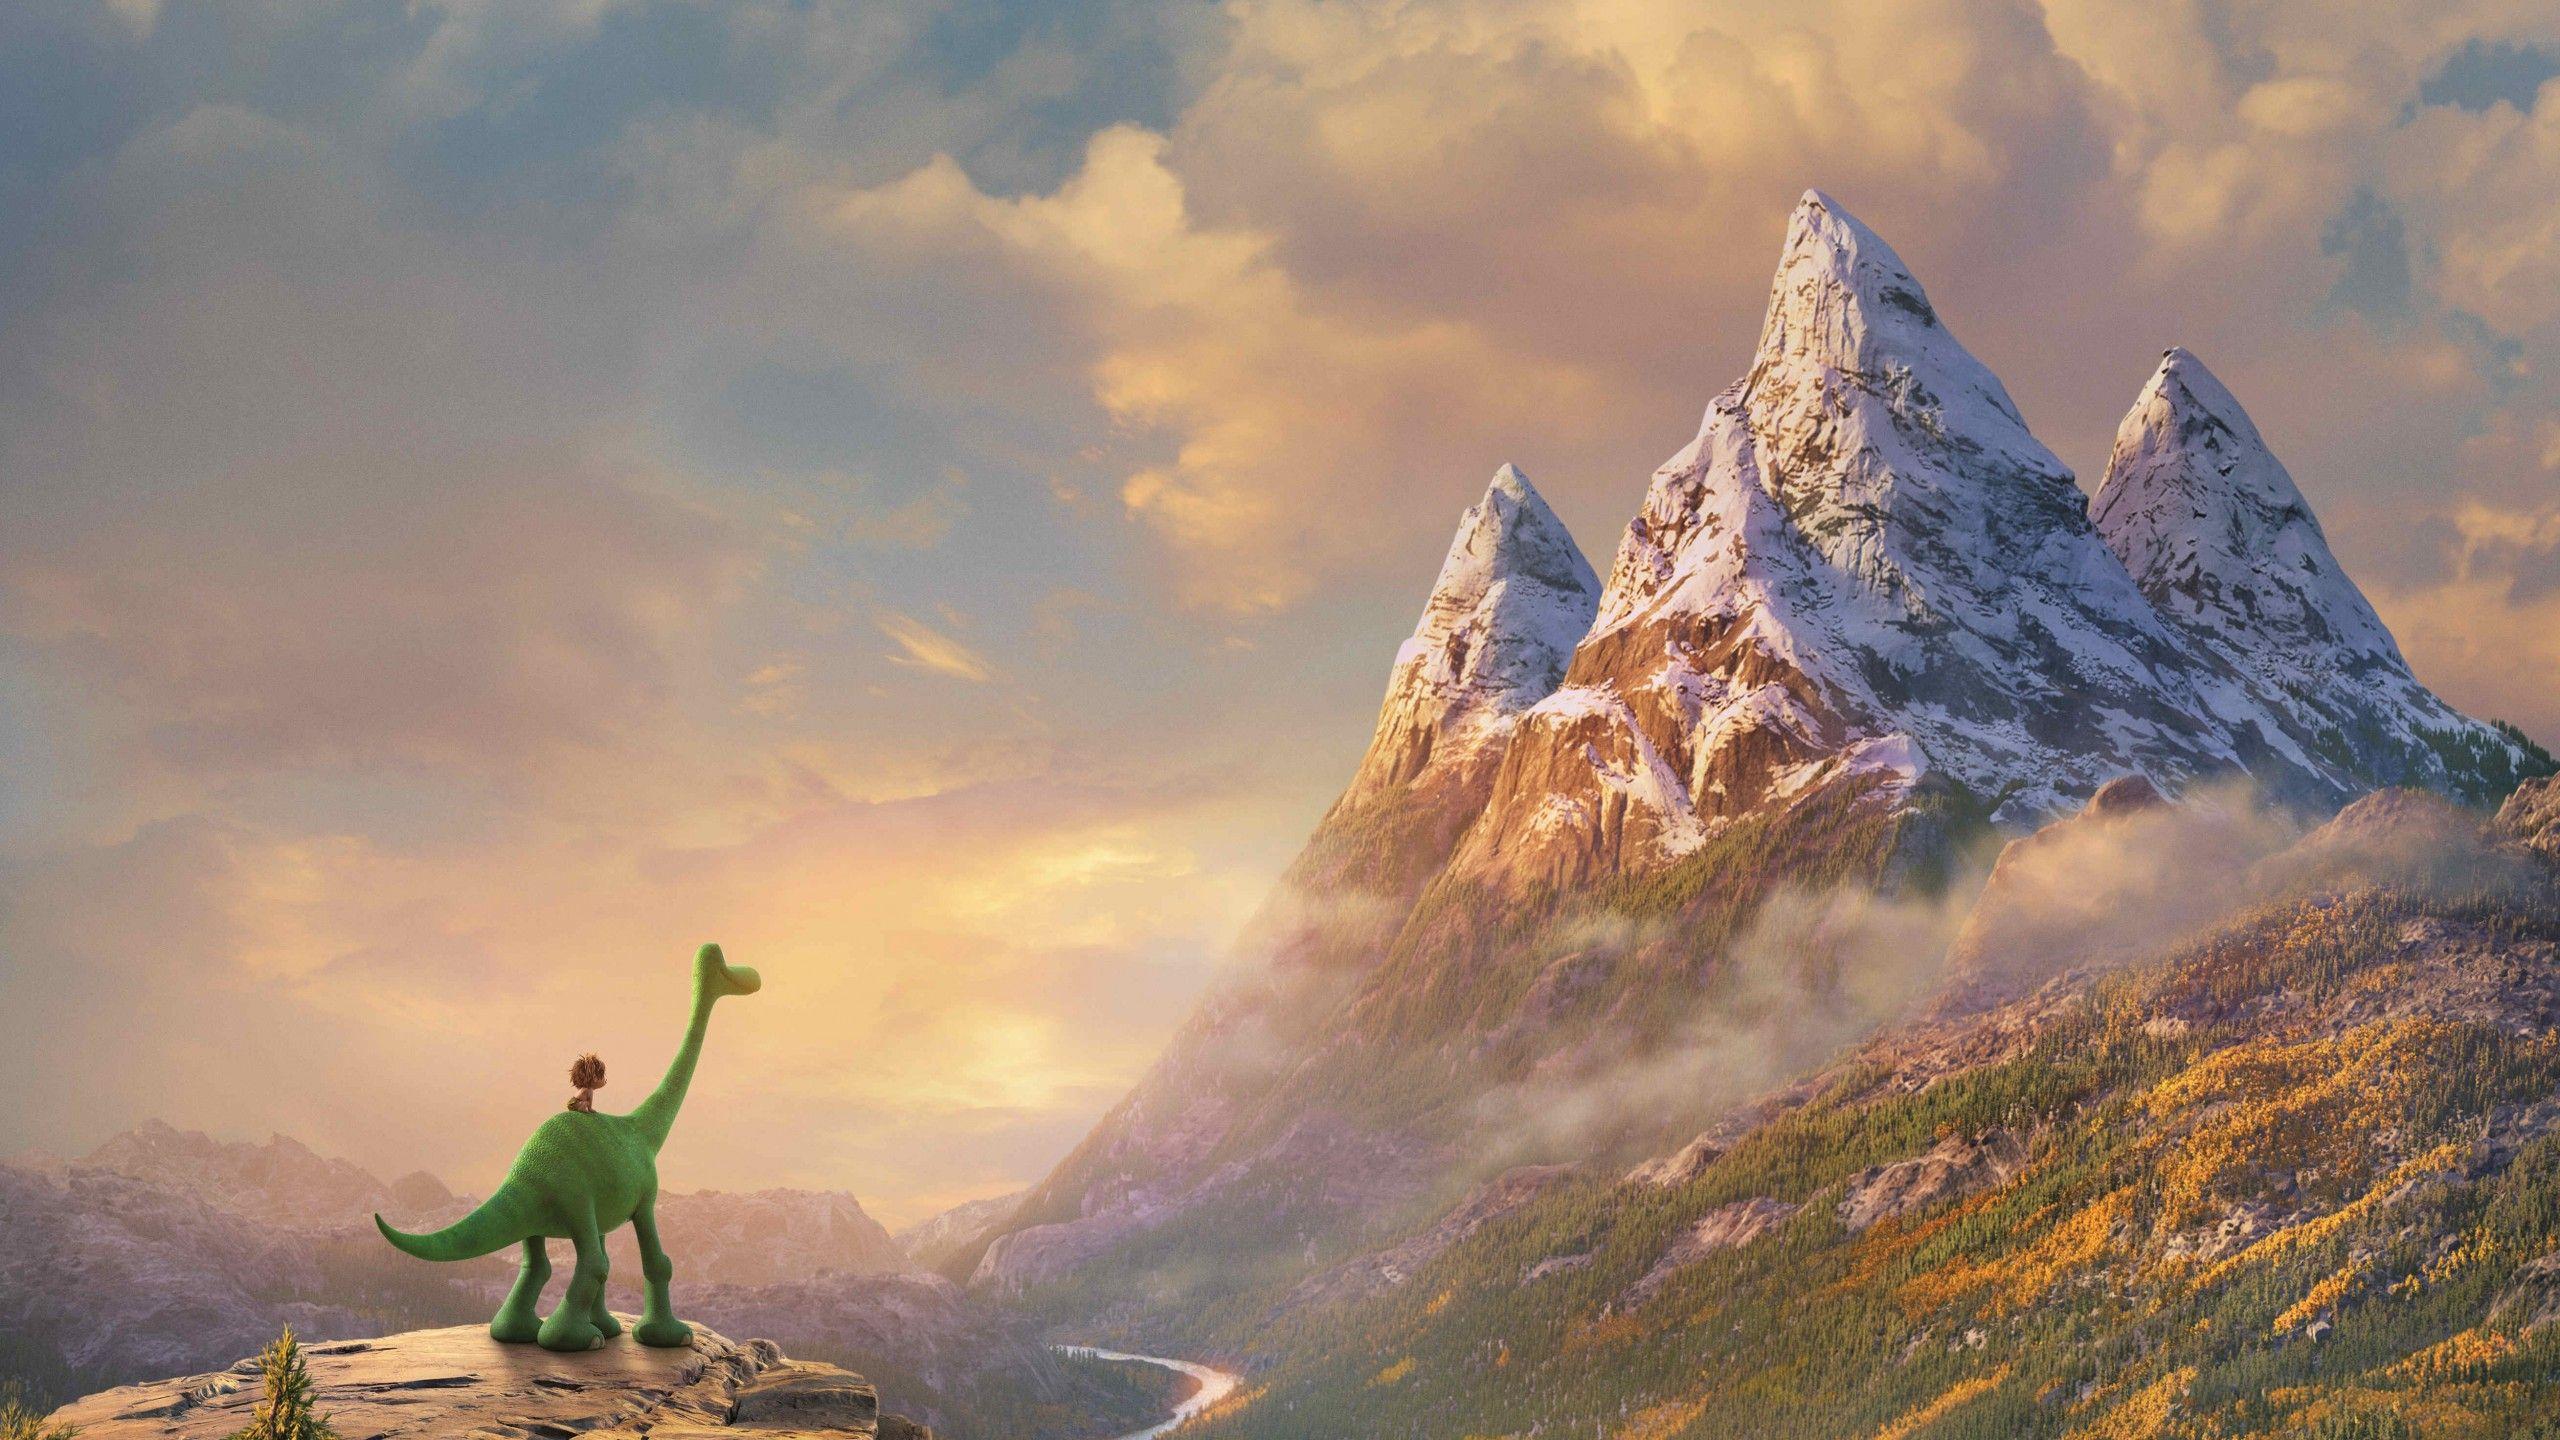 Wallpaper The Good Dinosaur, Pixar, Animation, Movies